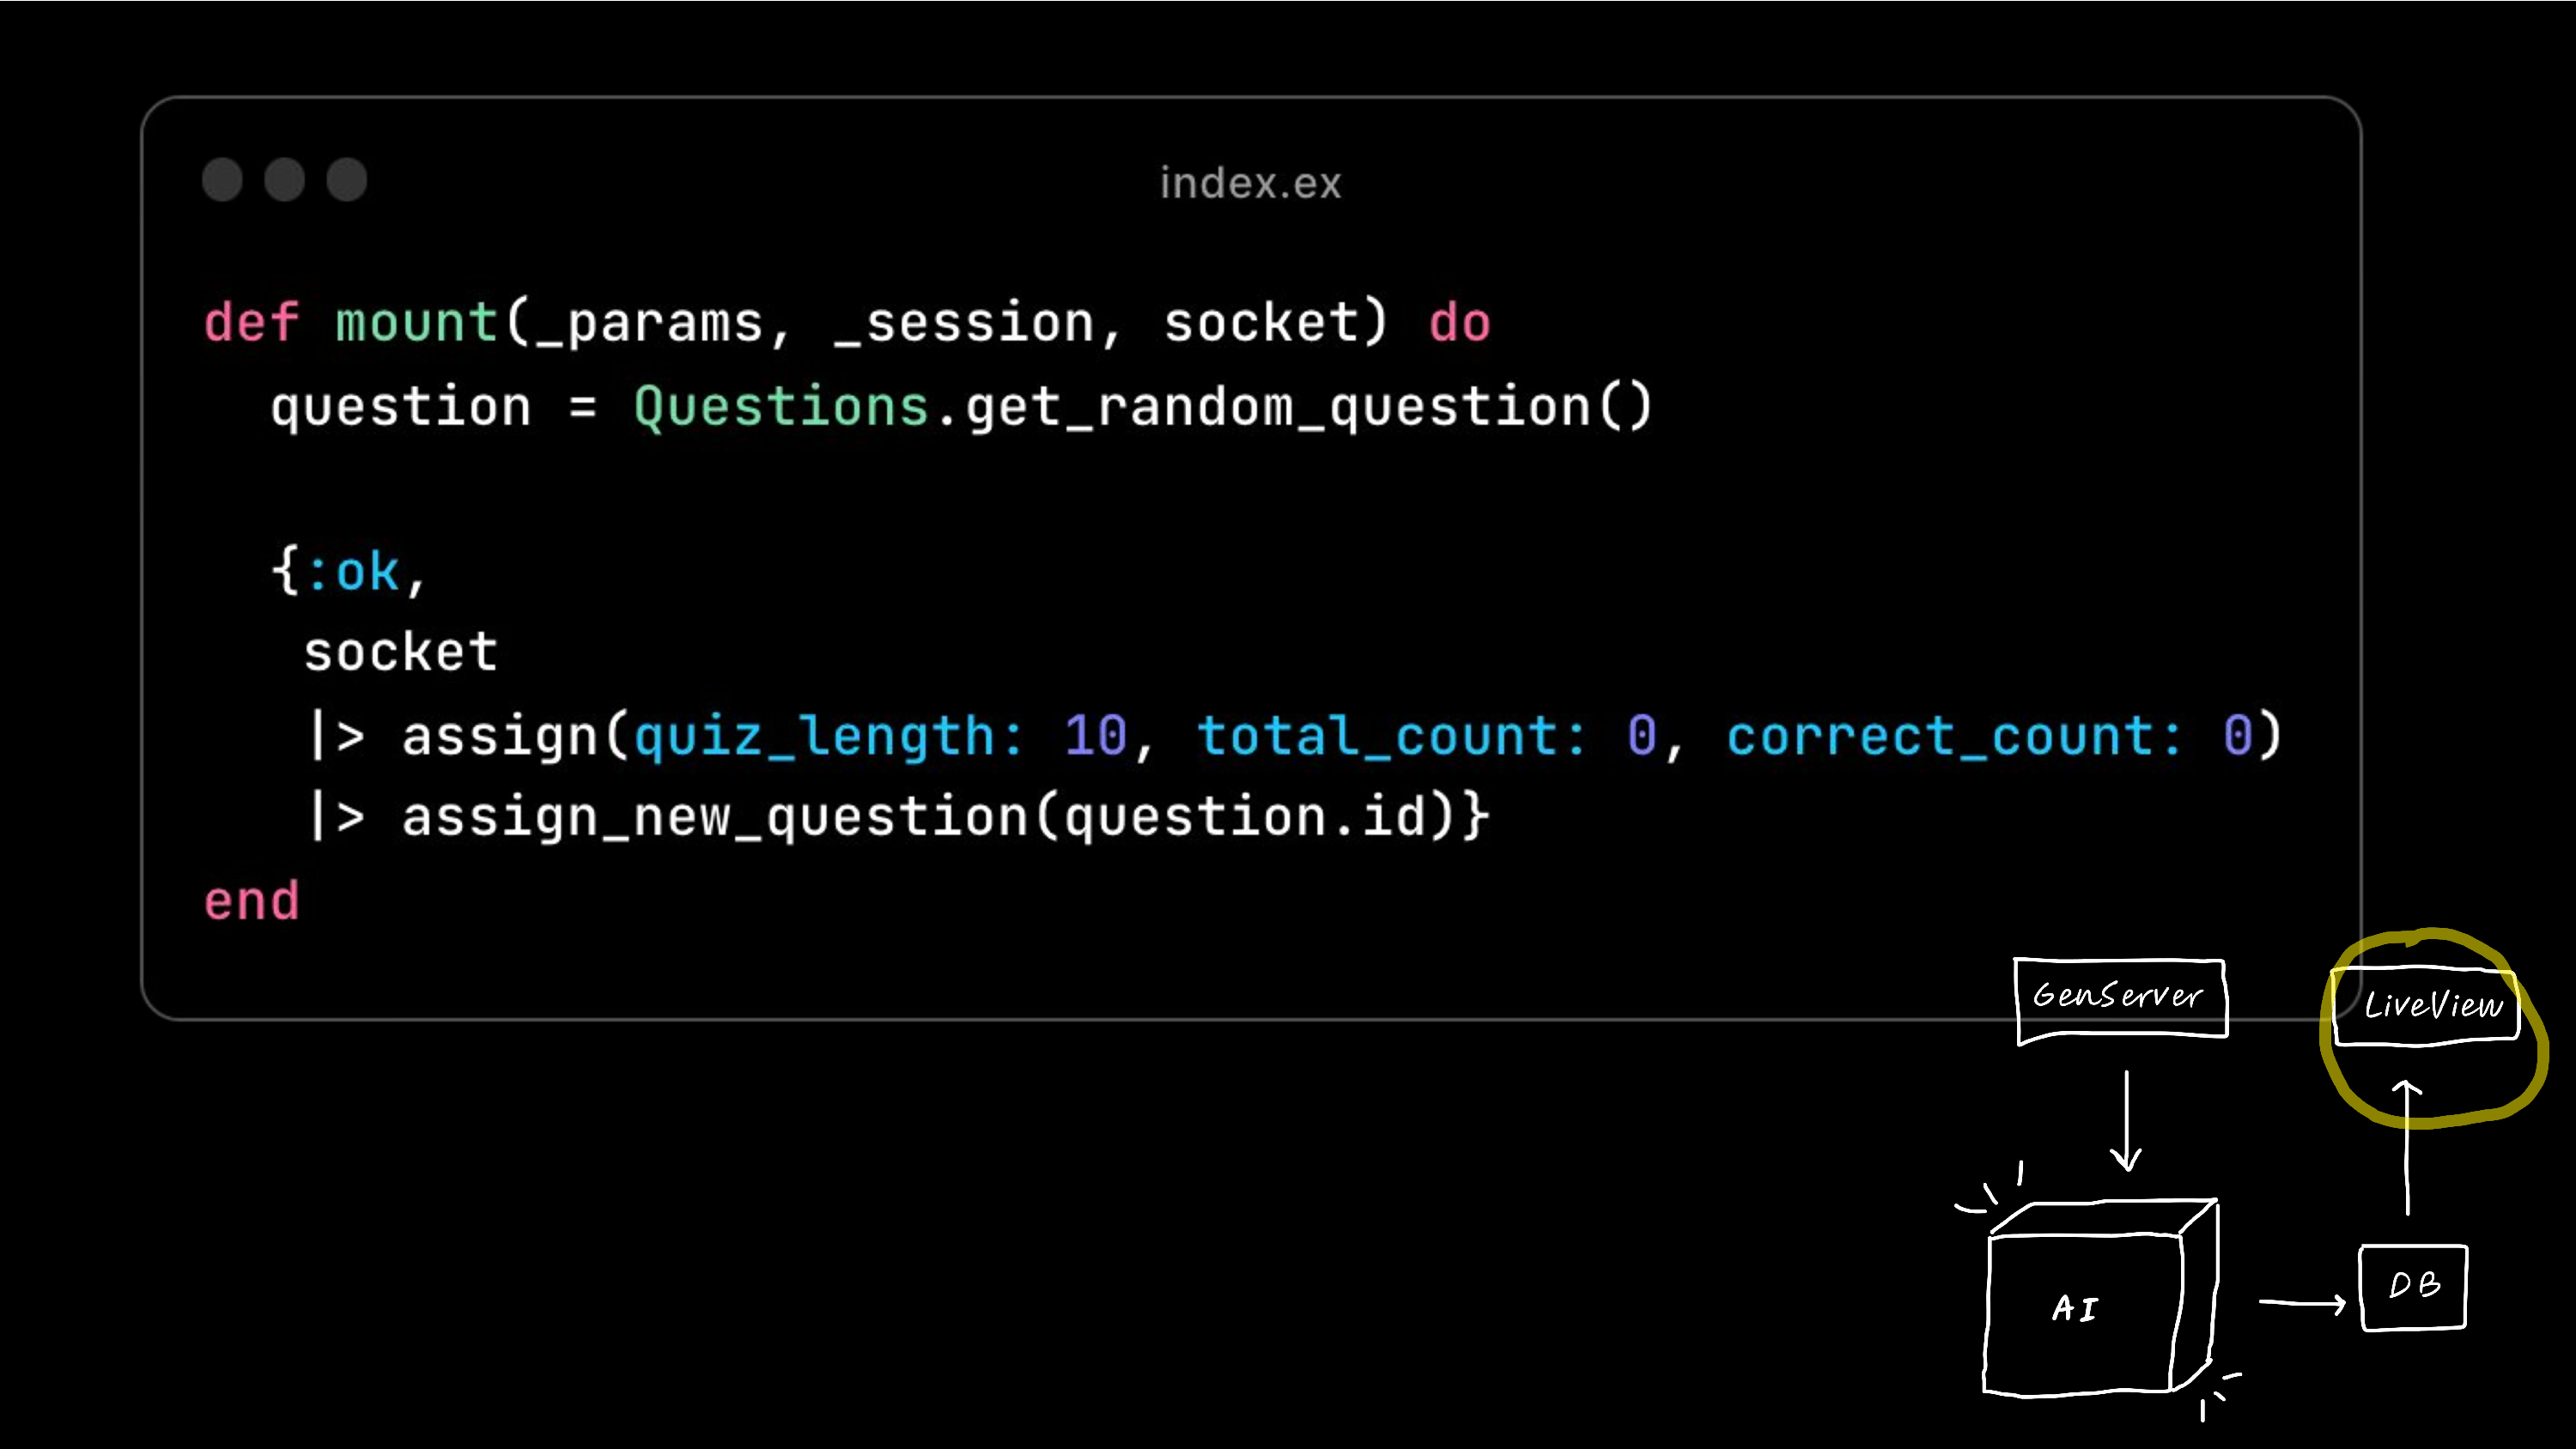 def mount(_params, _session, socket) do
question = Questions.get_random_question()
LIS
BT 4
|> assign(quiz_length: 10, total_count: 0, correct_count: 0)
|> assign_new_question(question.id)}
CLC]
—
Ky l
@ _'
